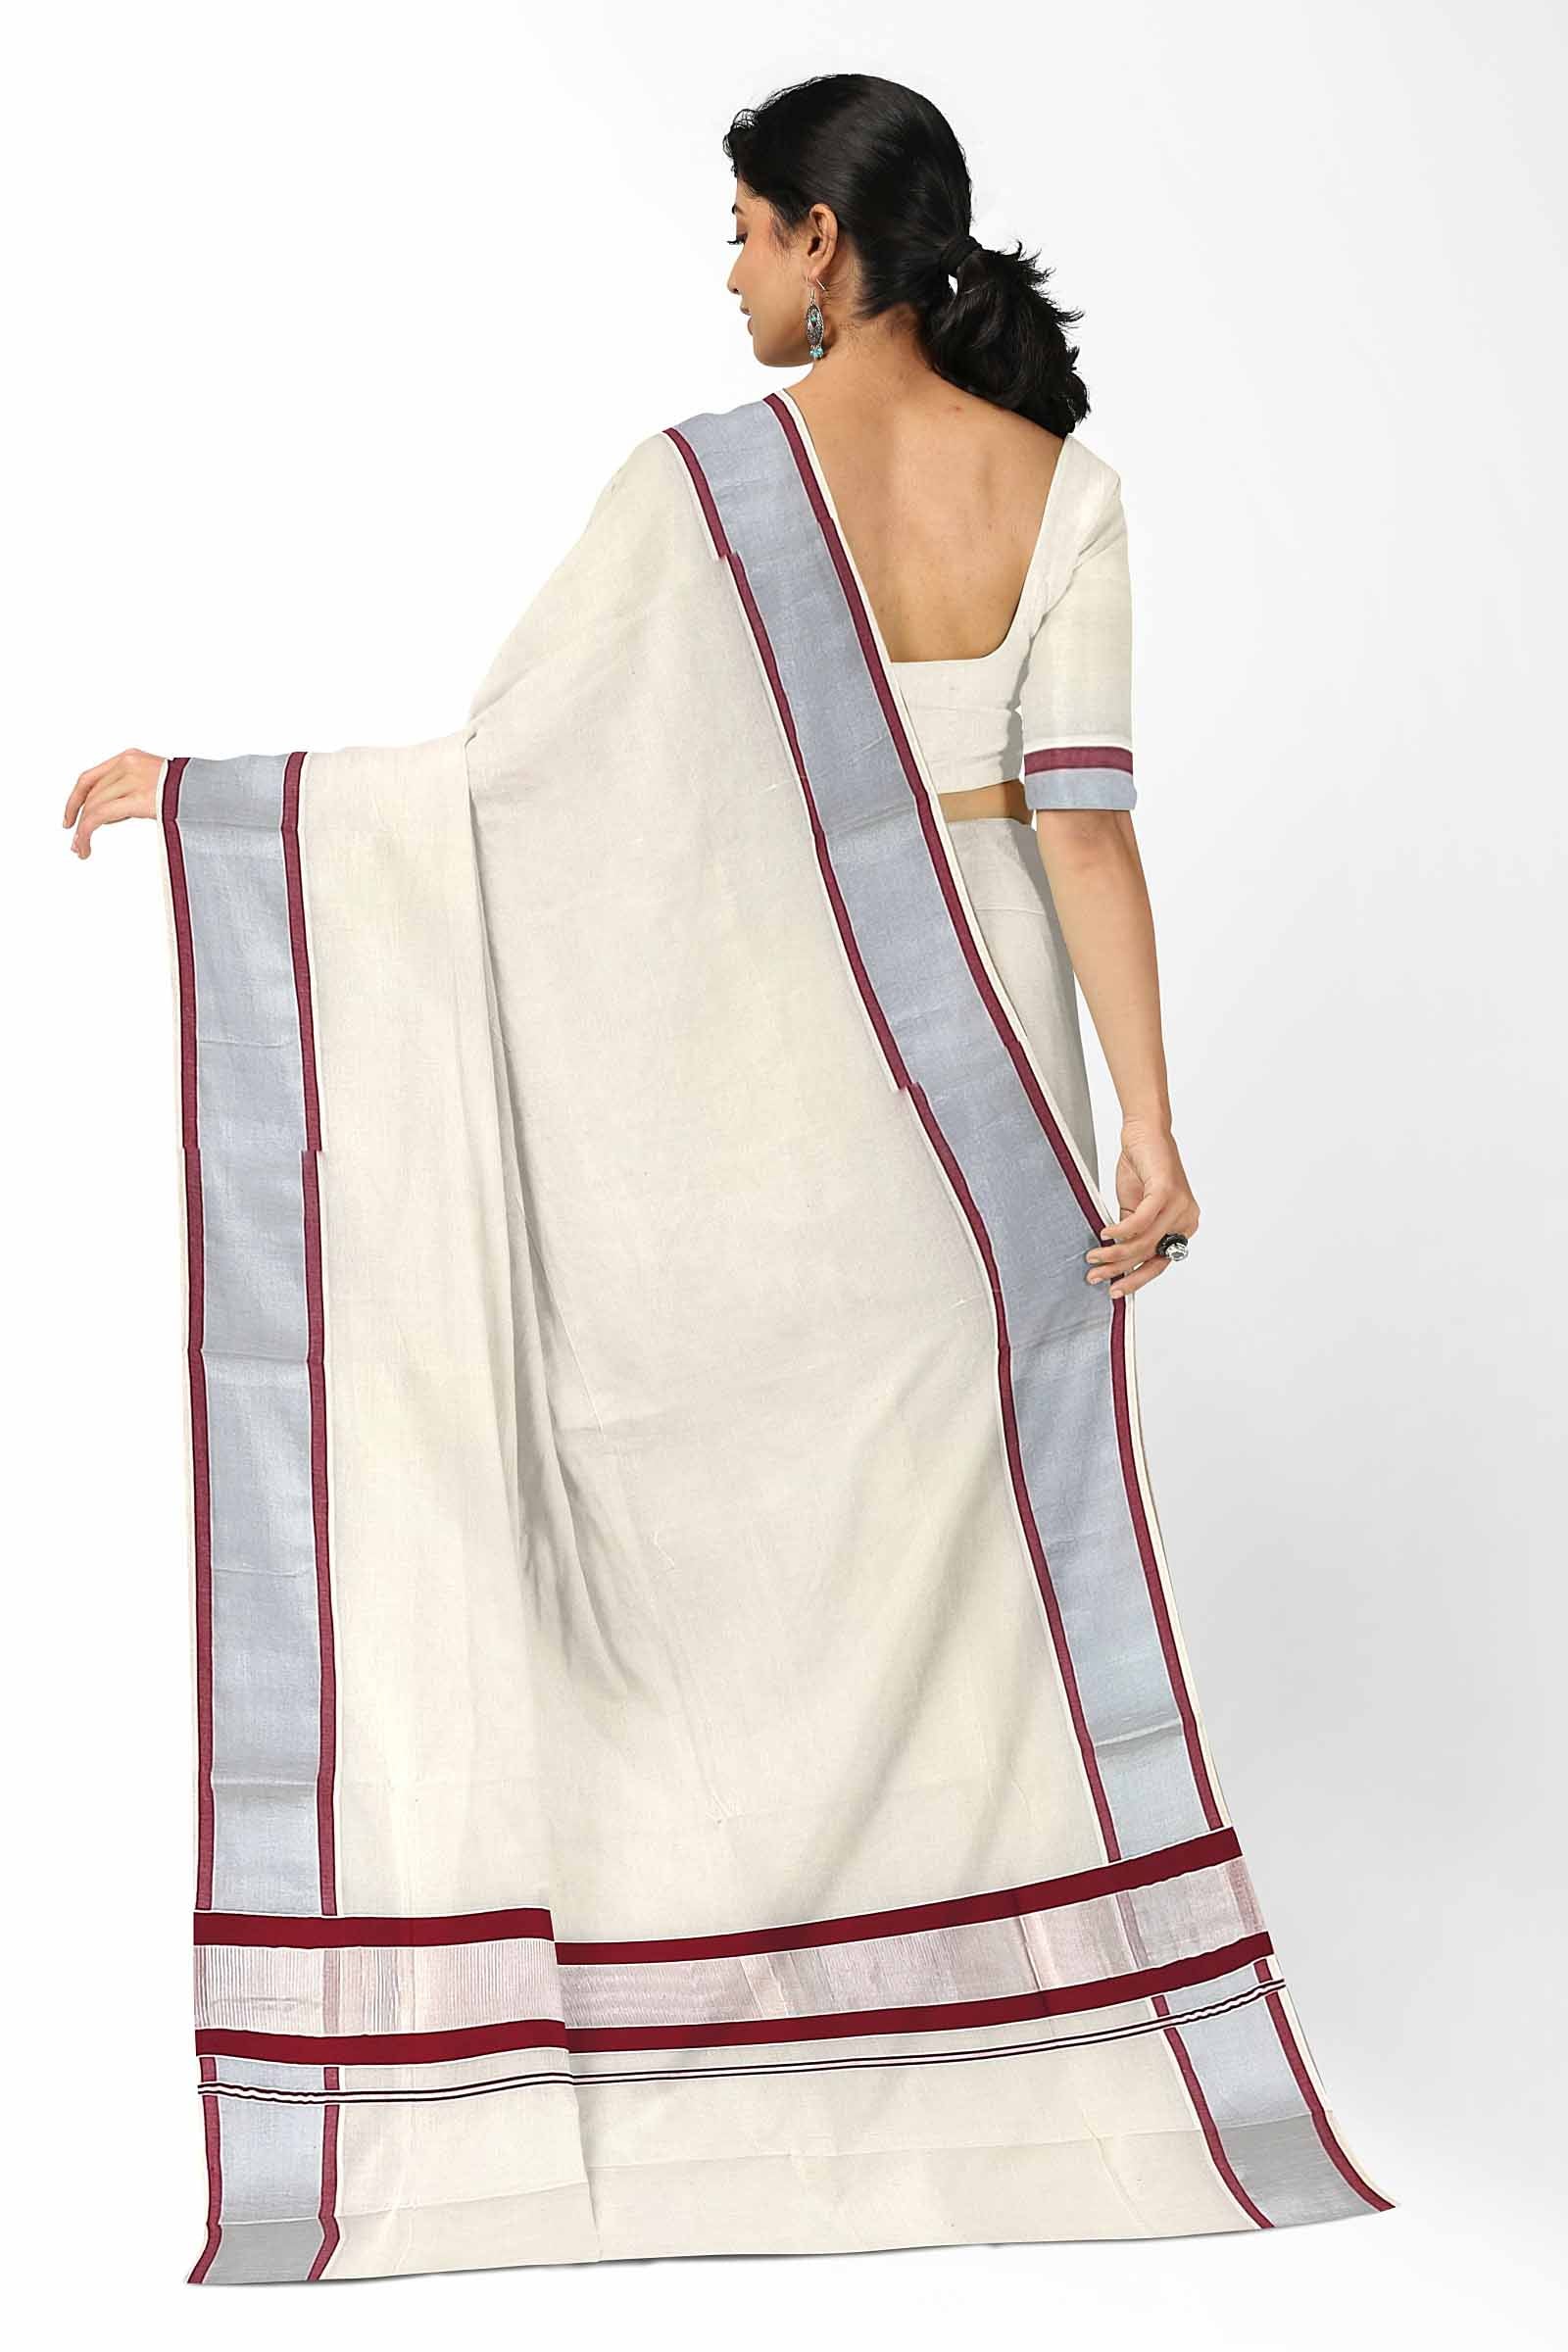 Onam Vibes - Kerala cotton saree... - Madhura Boutique | Facebook